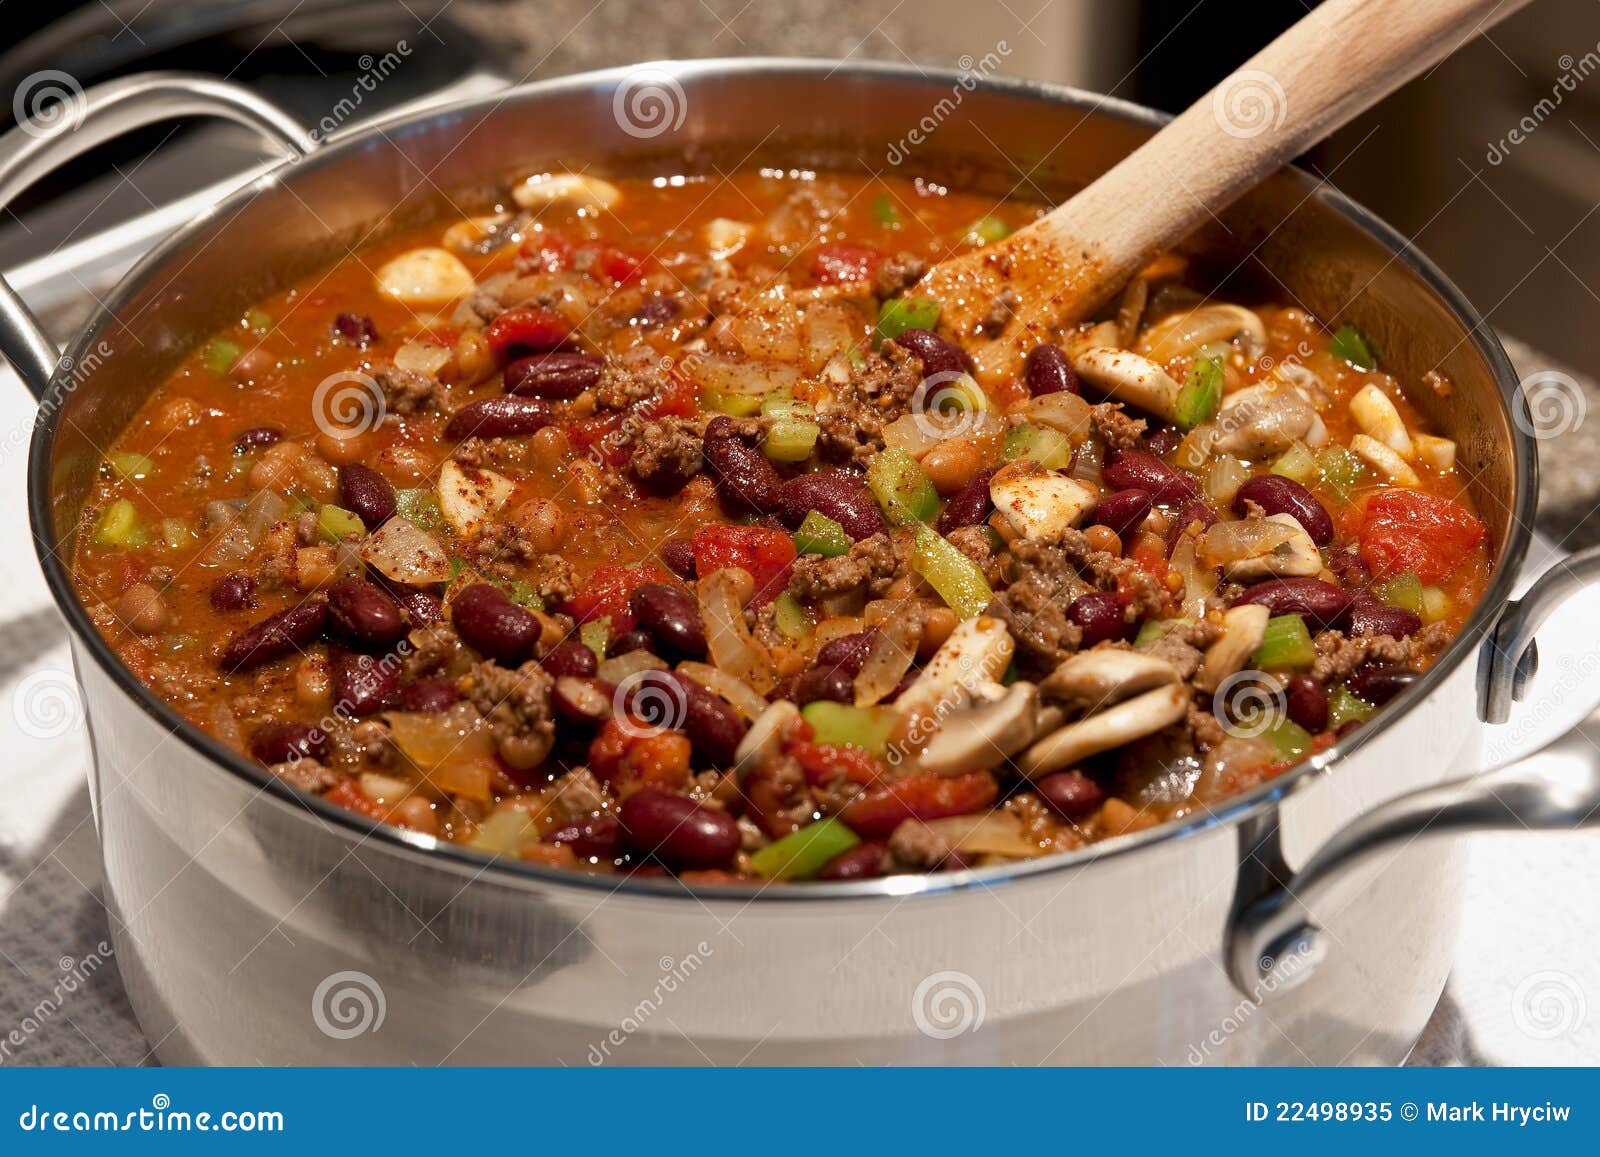 homemade pot of chilli